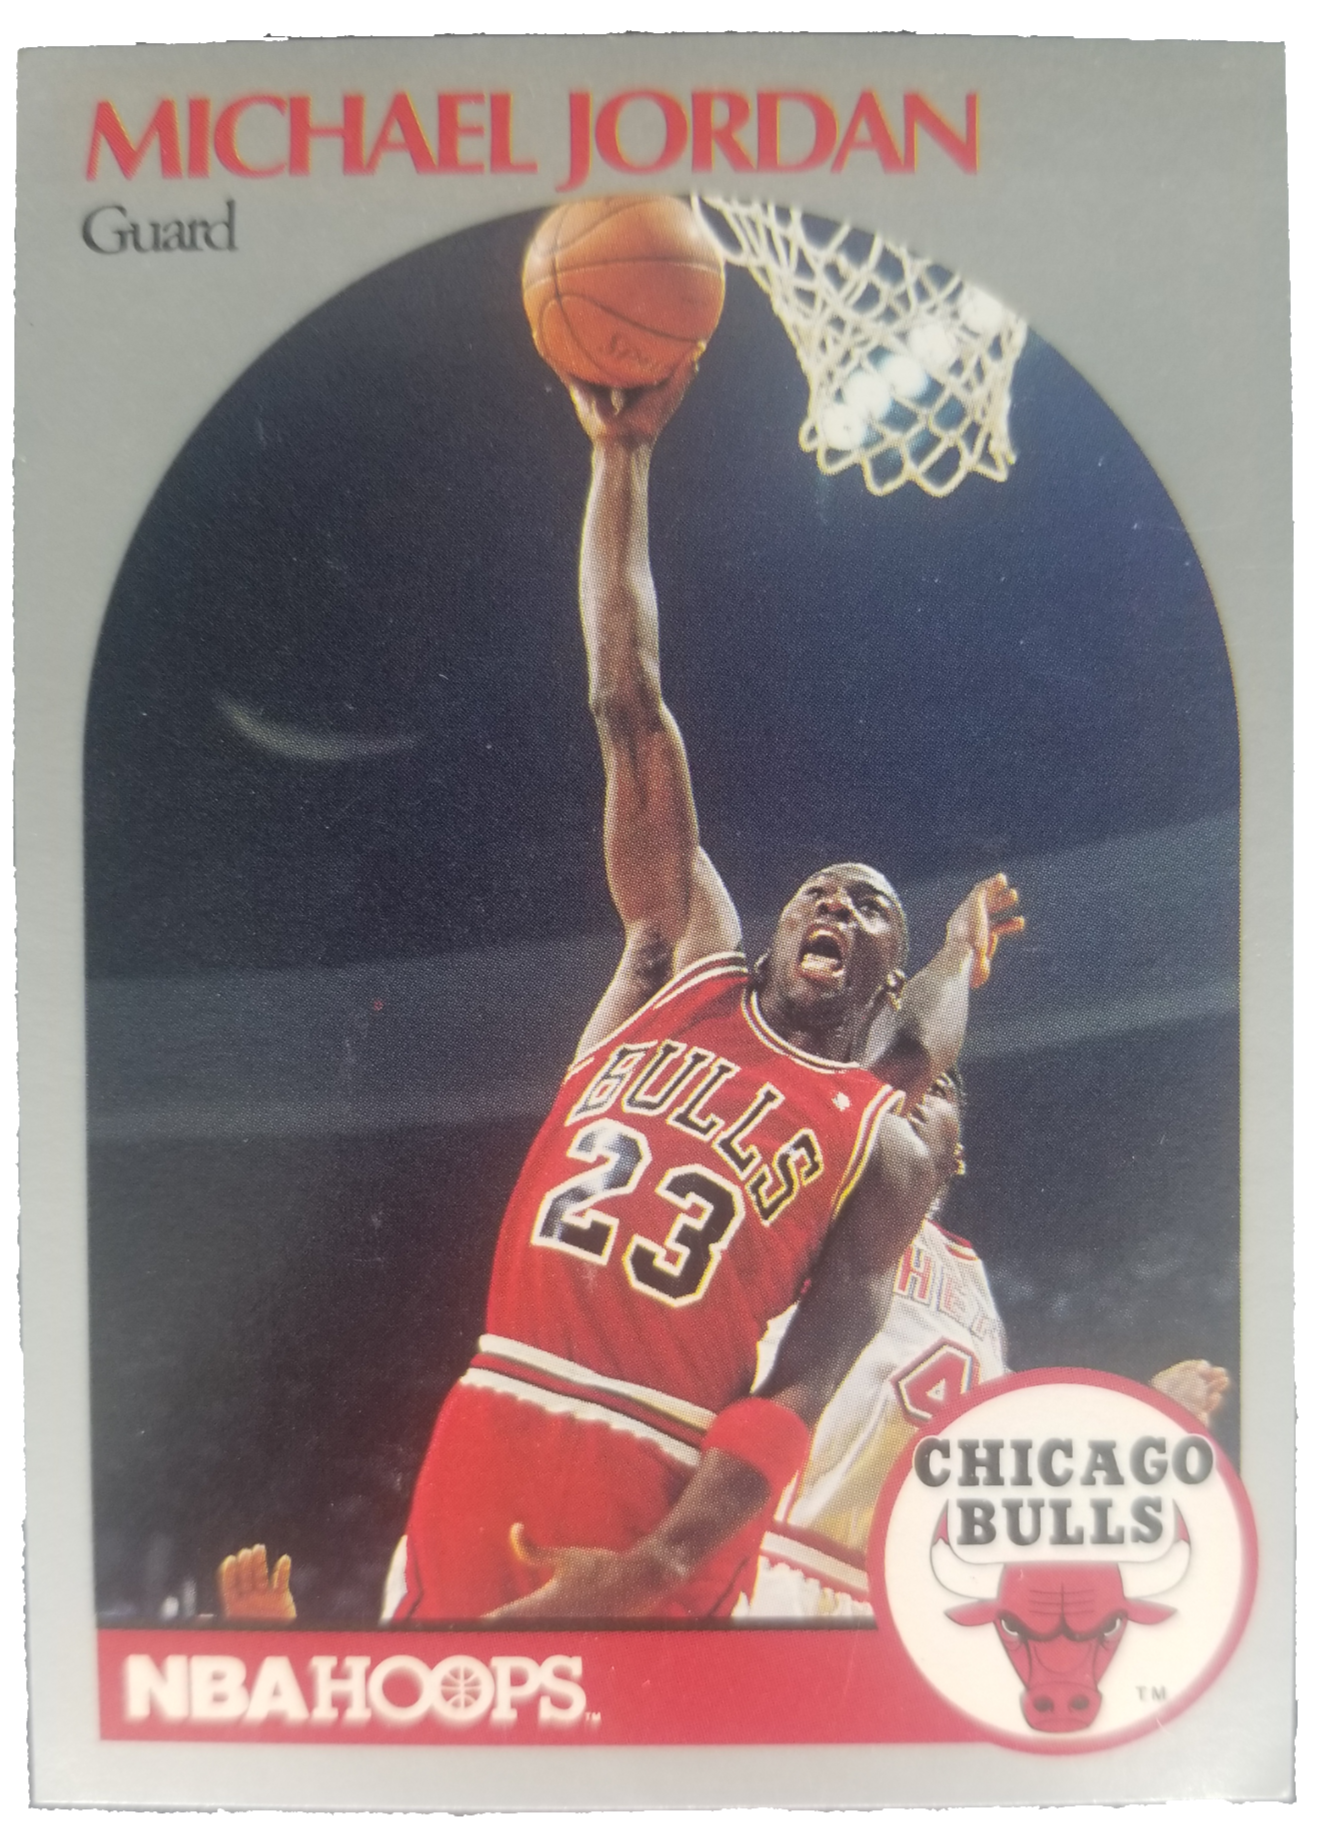 Michael Jordan Rare Air Promo Card /10,000 – All In Autographs